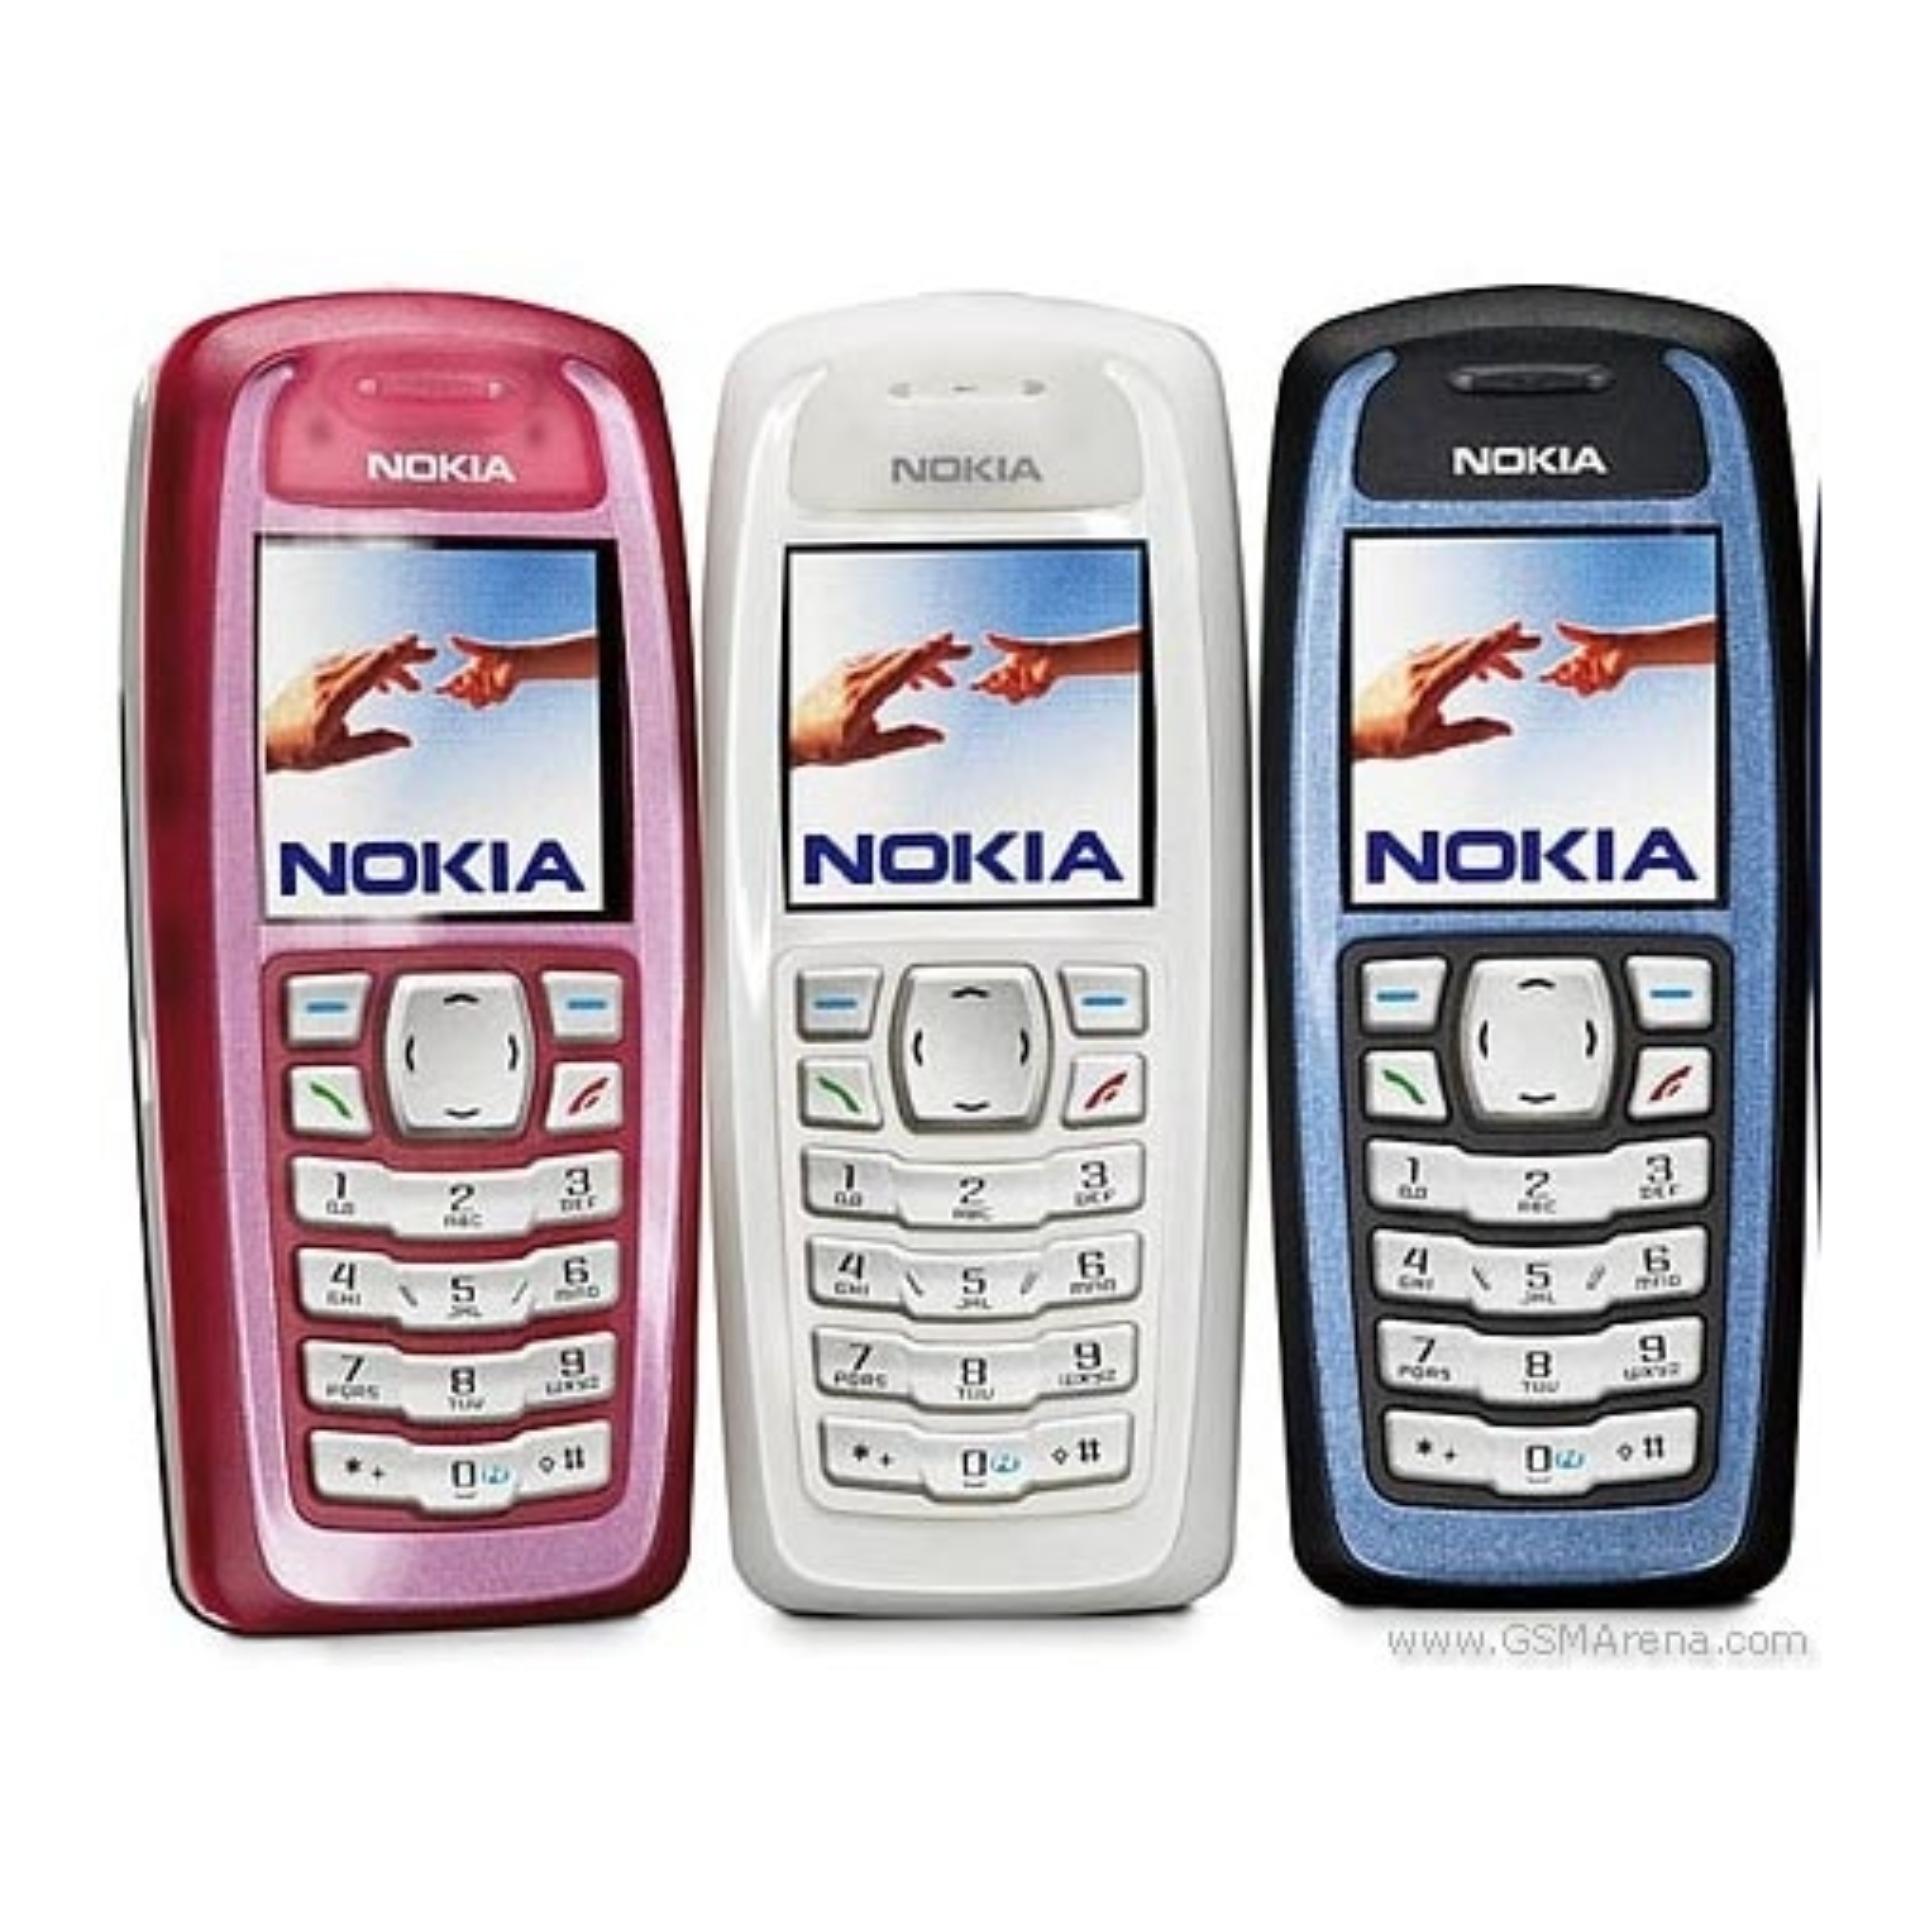 Nokia 3100 - Handphone Jadul Murah